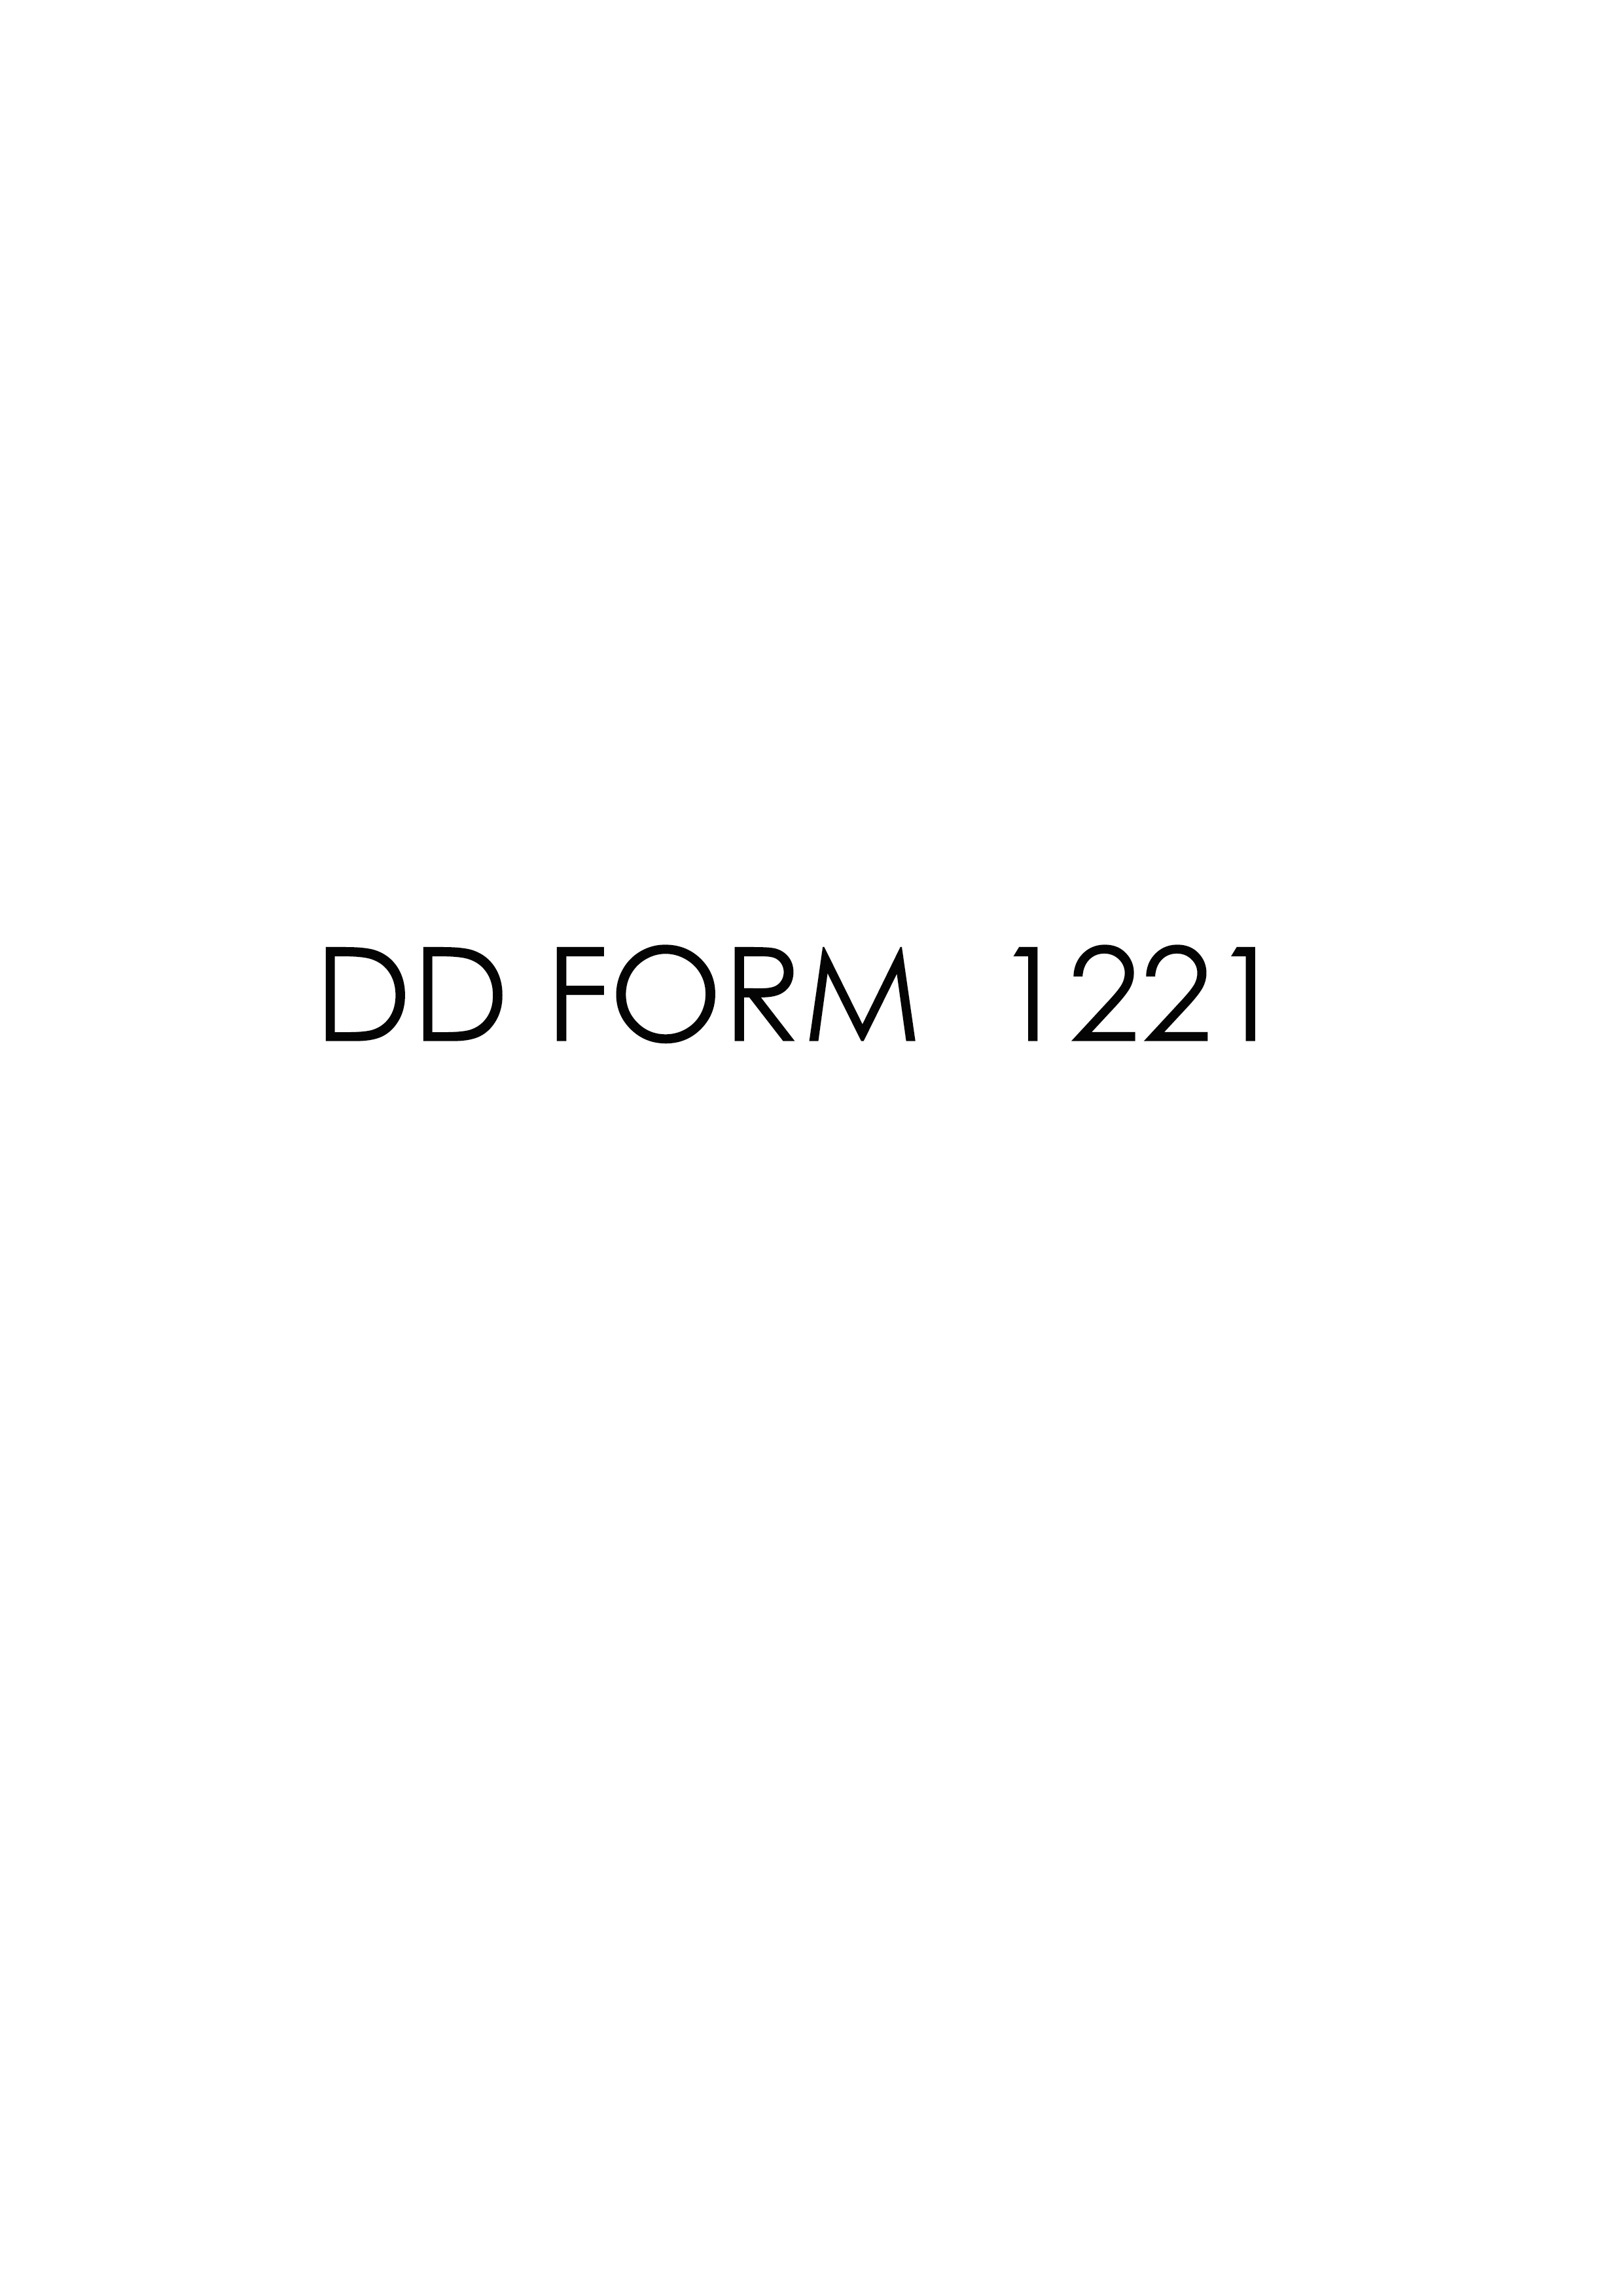 Download dd Form 1221